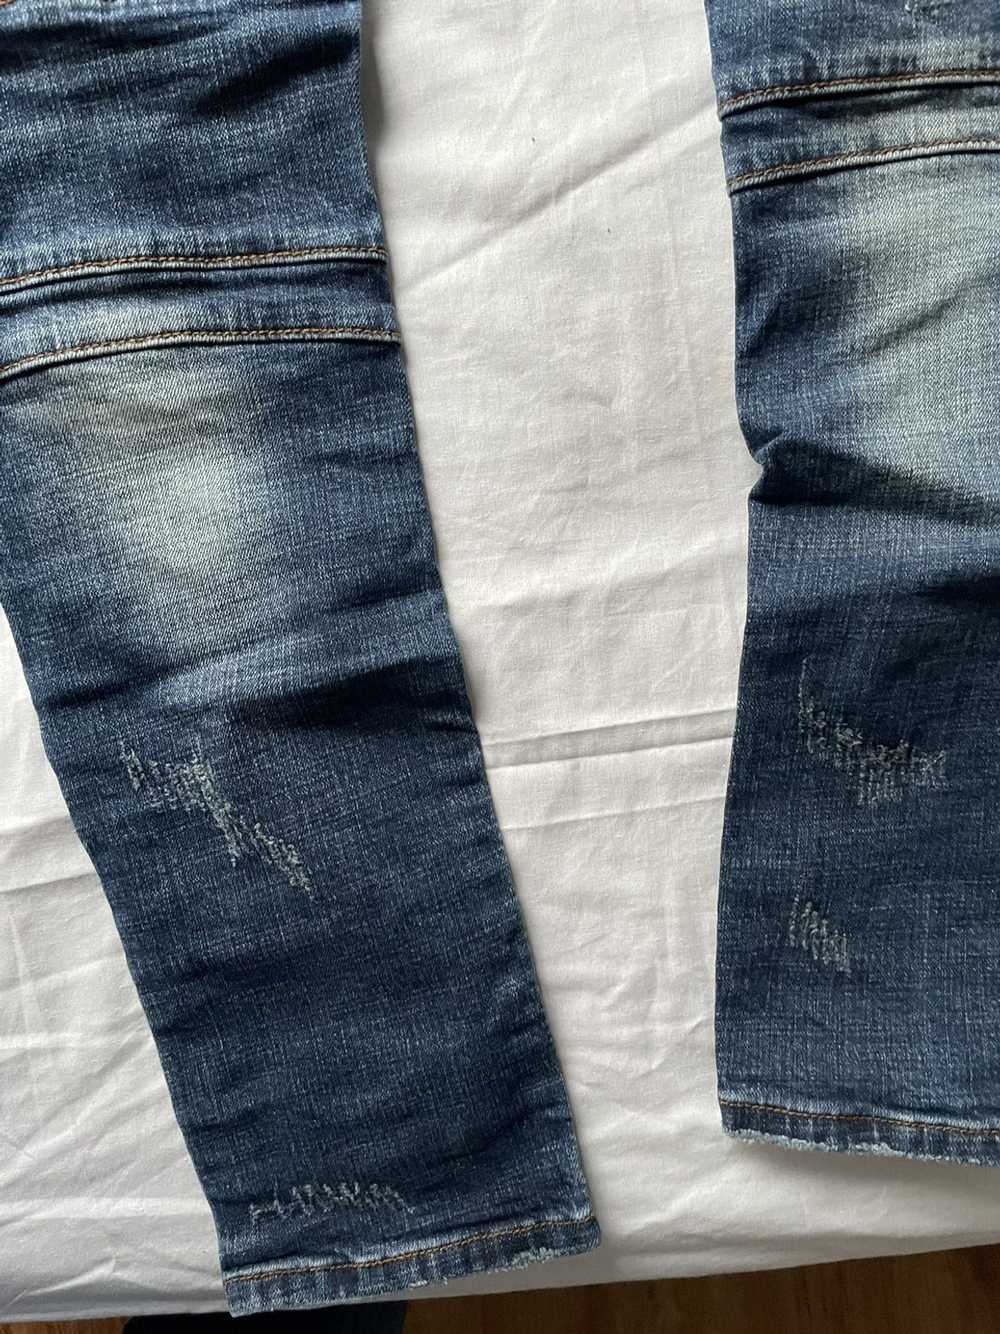 Japanese Brand Blue Jeans - image 5